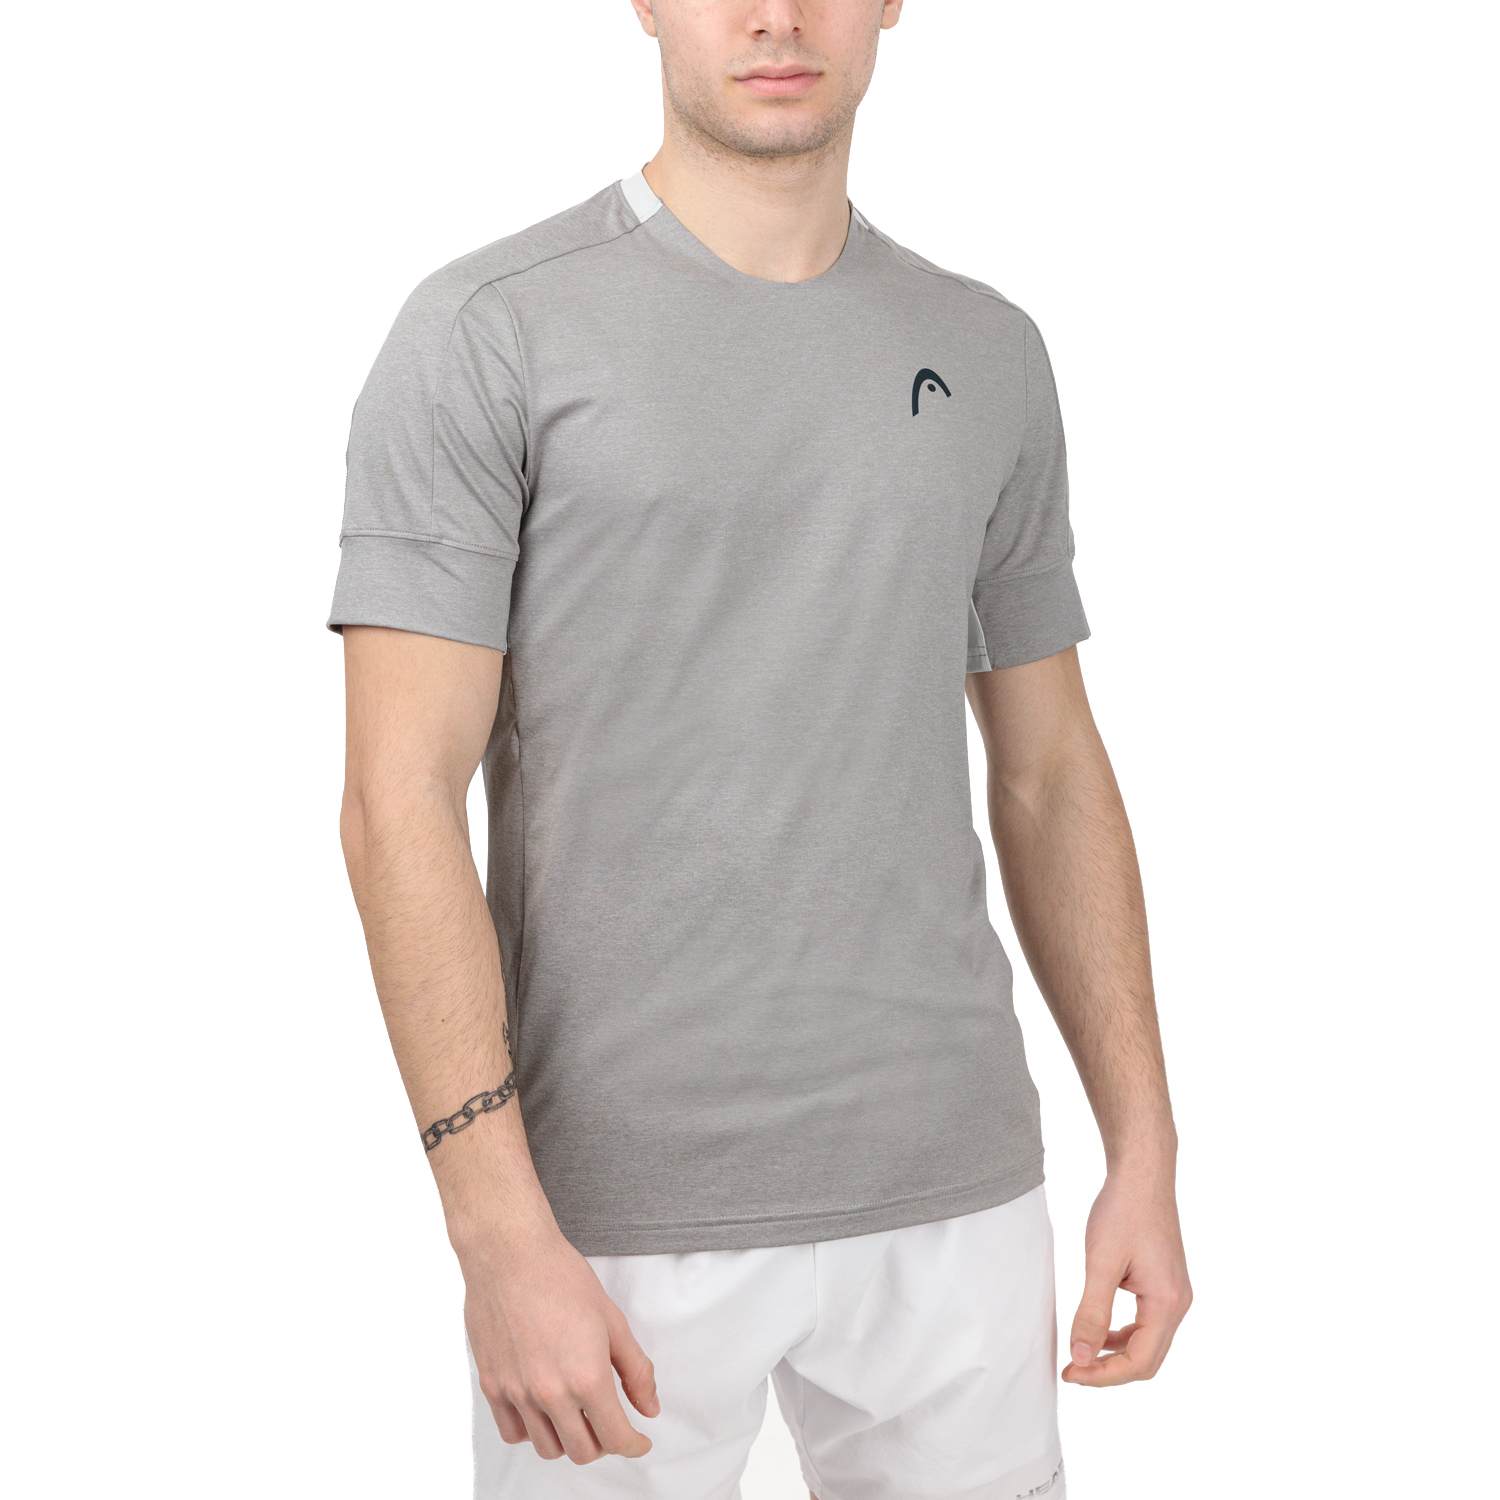 Head Play Tech Logo Camiseta - Grey